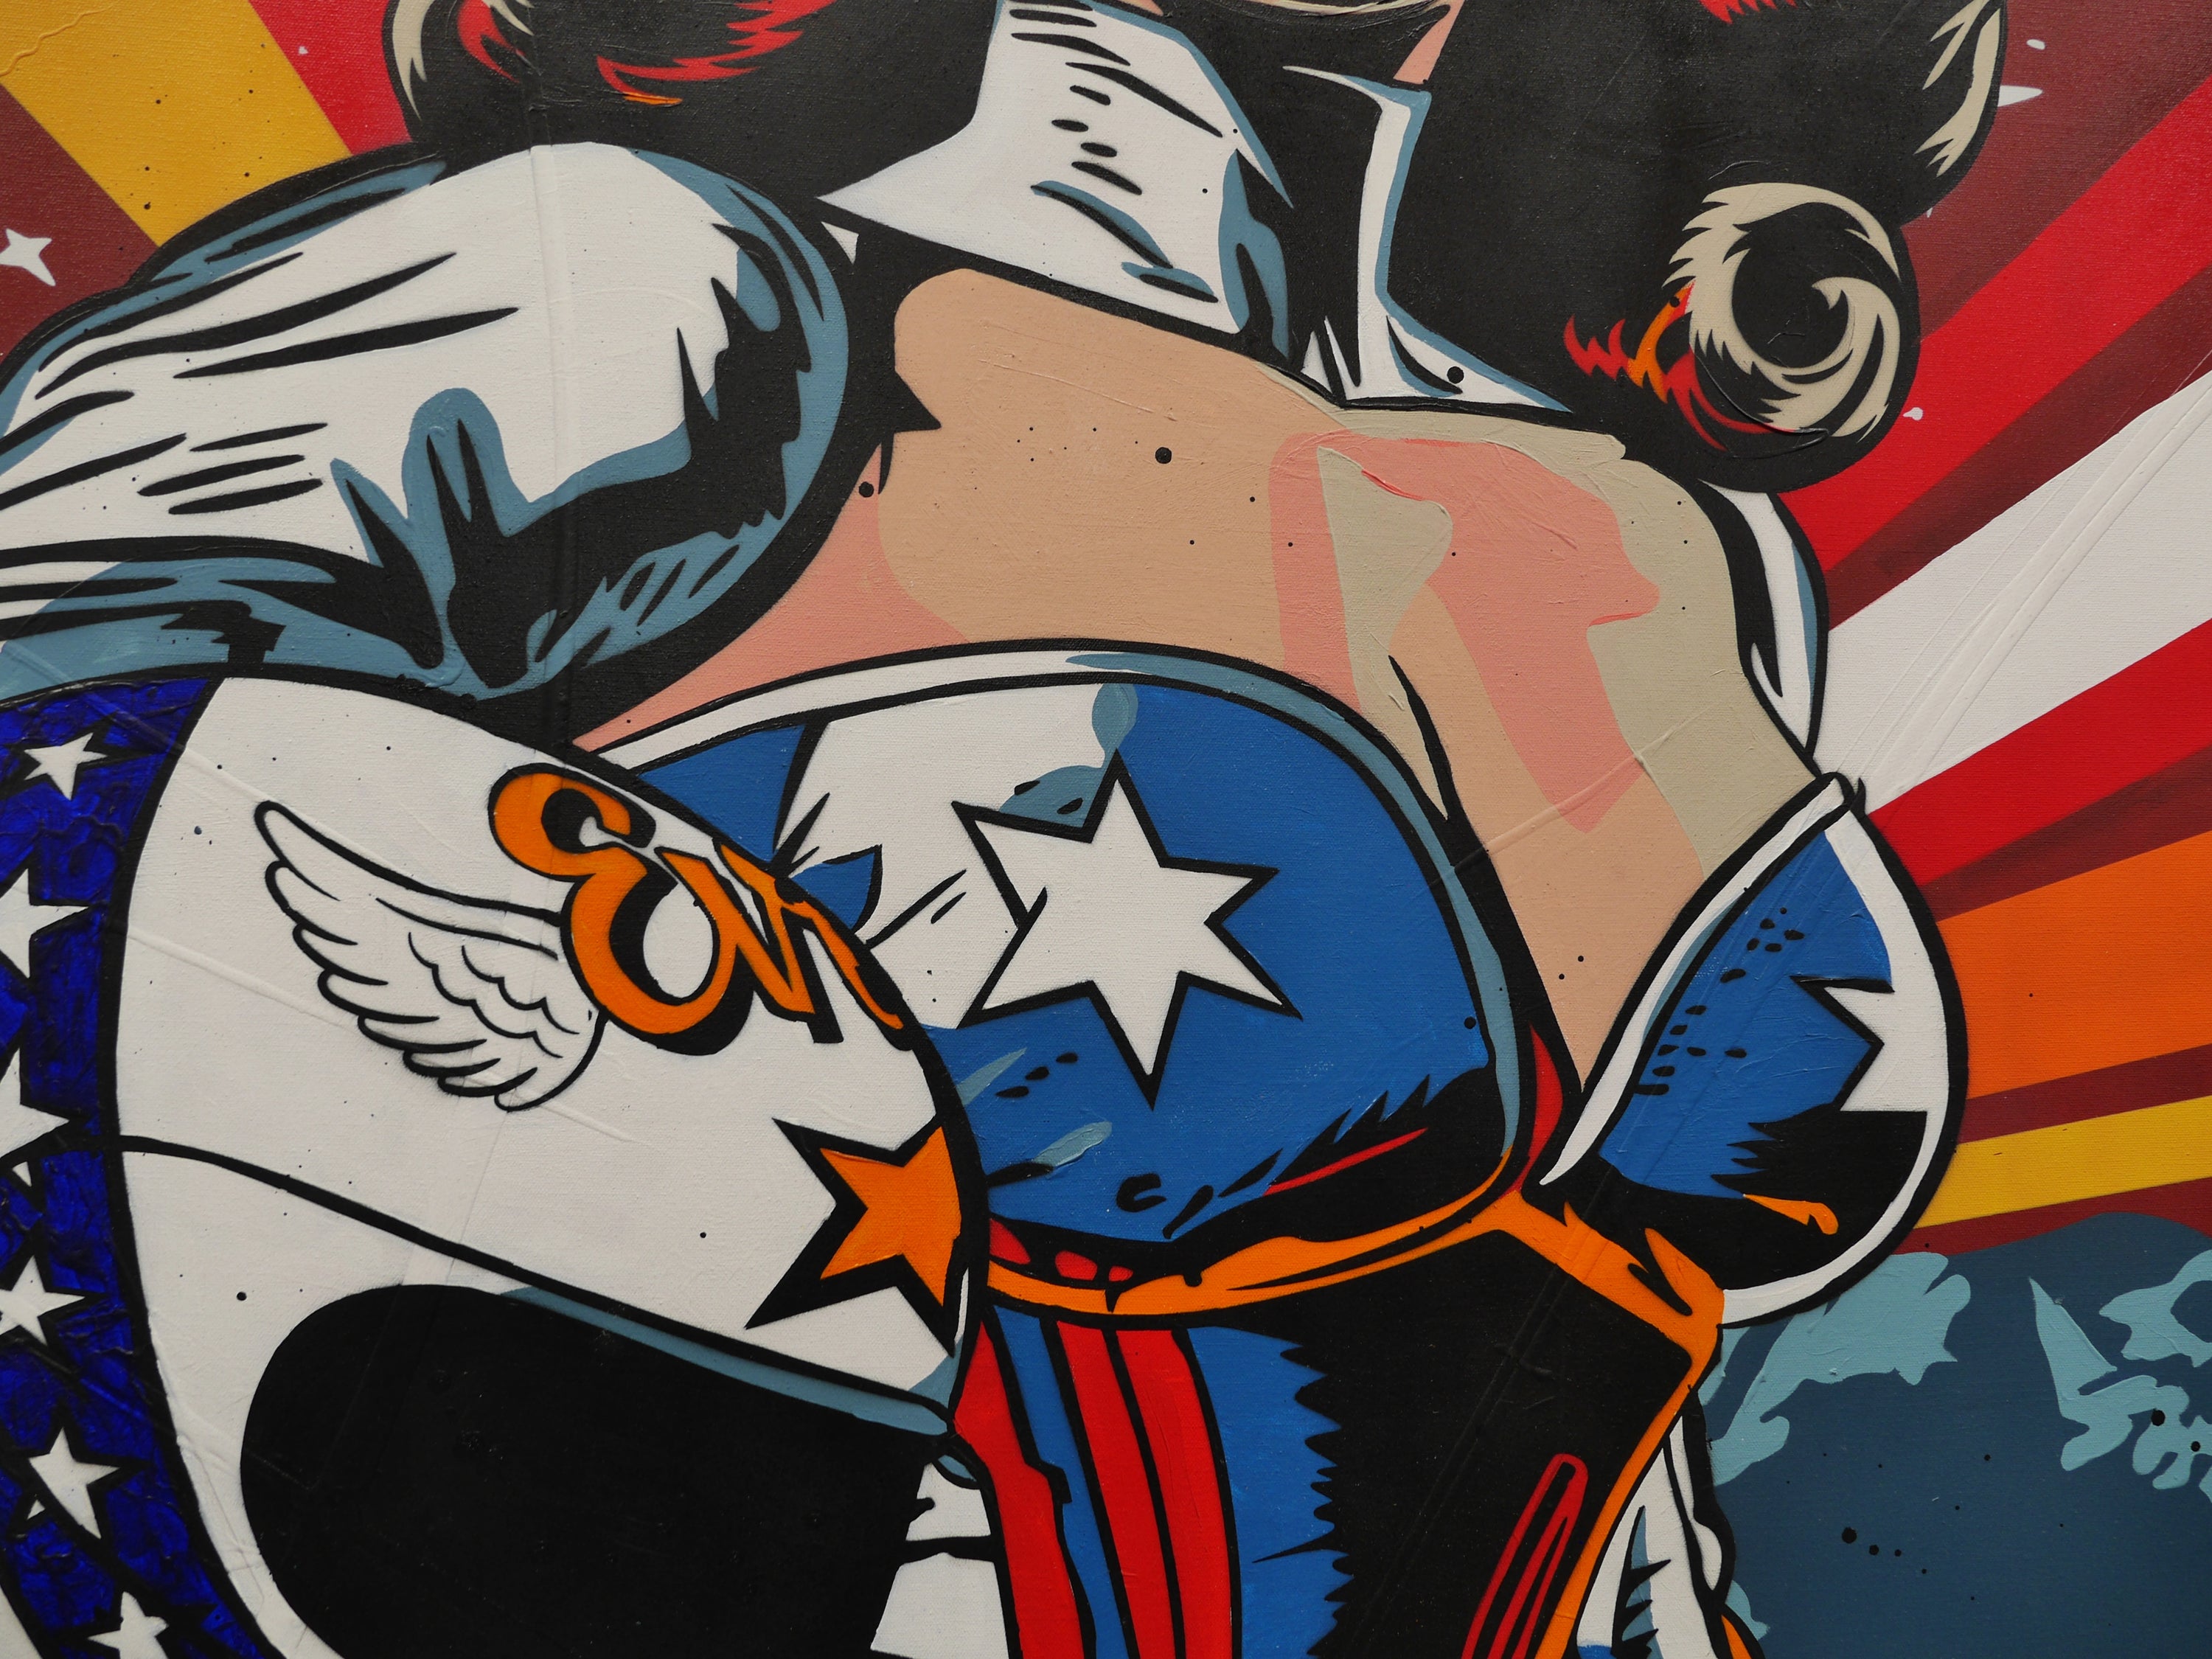 My Shot 150cm x 150cm Evel Knievel Stunt Devil Textured Urban Pop Art Painting (SOLD)